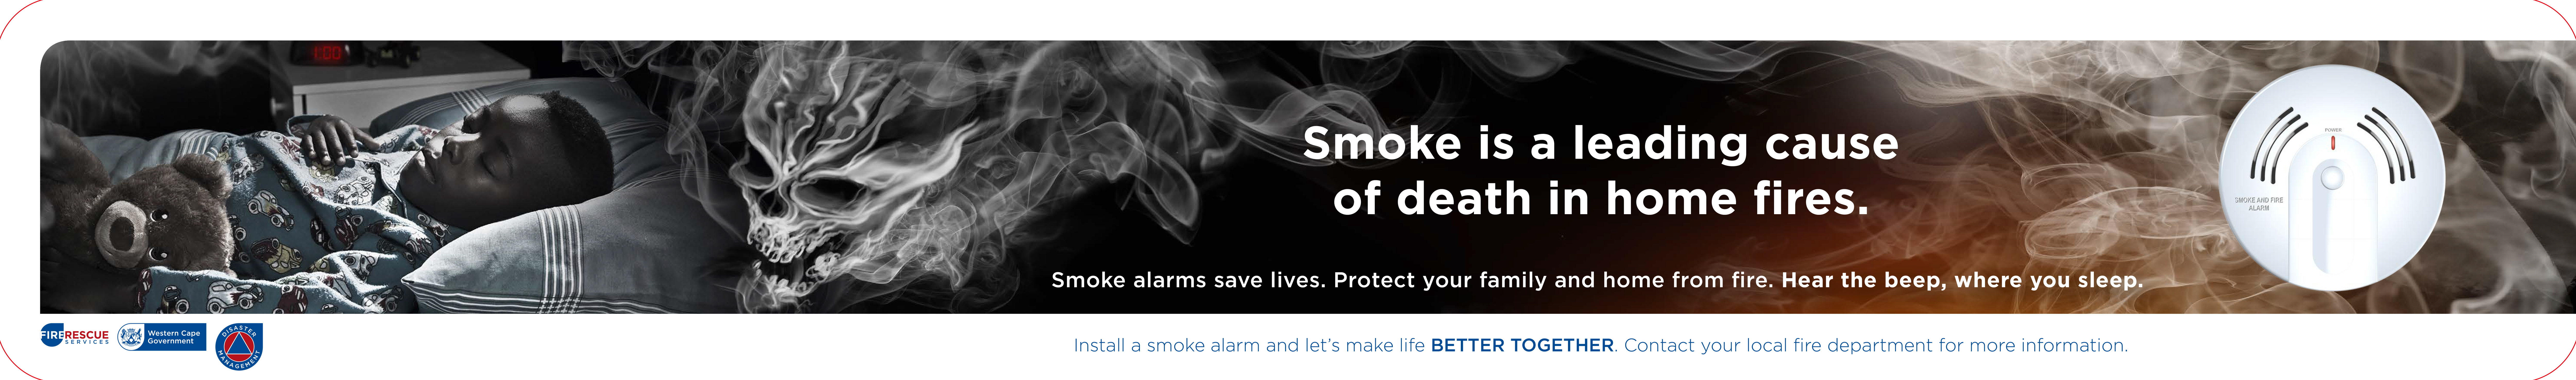 Smoke Alarm Campaign